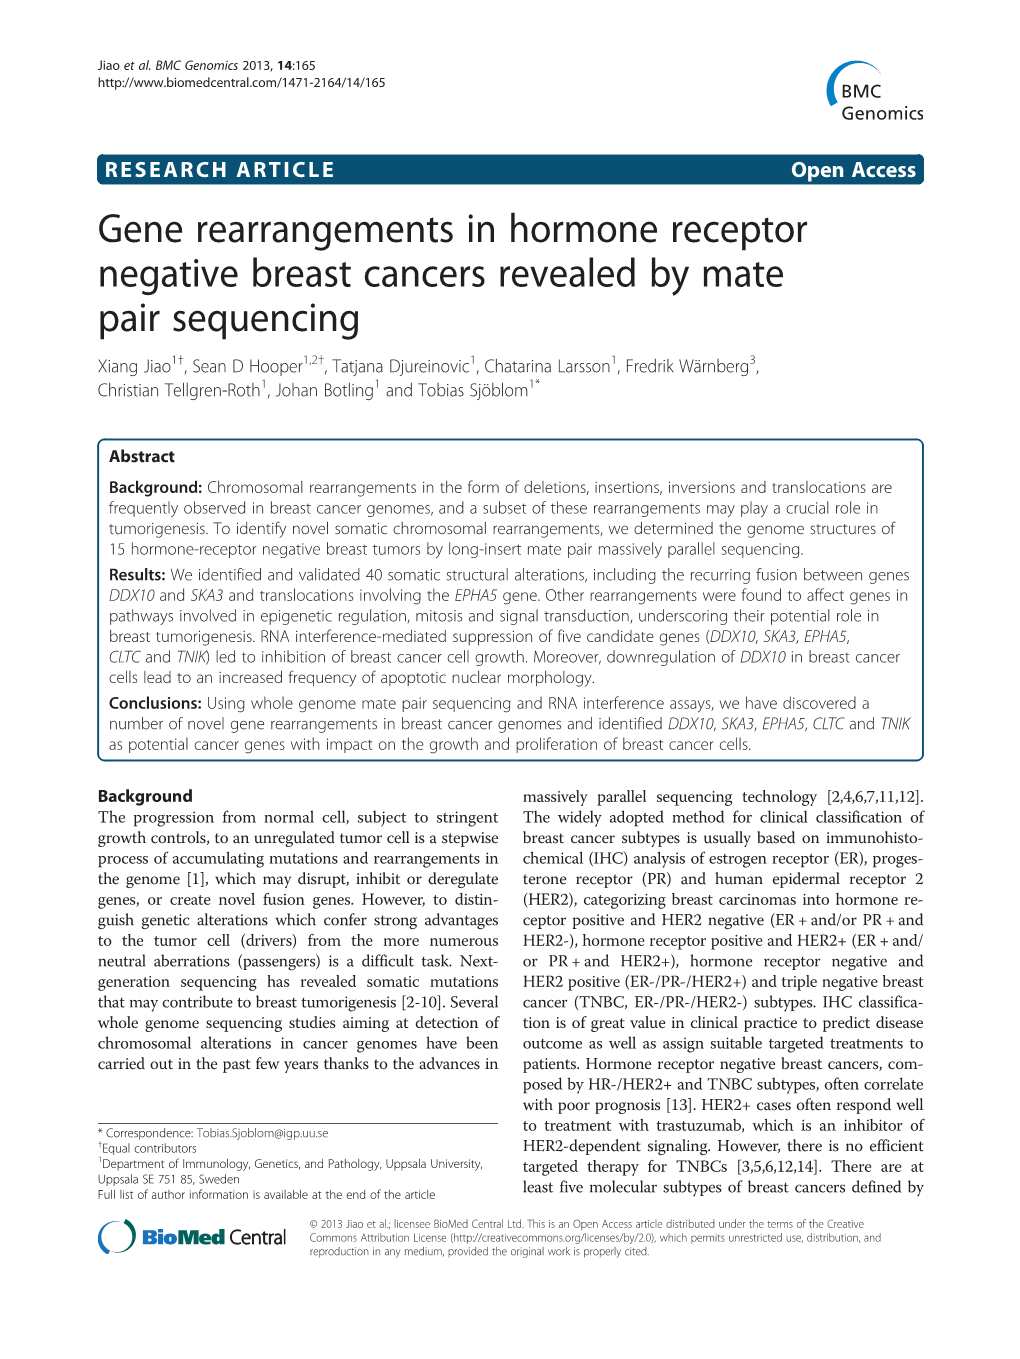 Gene Rearrangements in Hormone Receptor Negative Breast Cancers